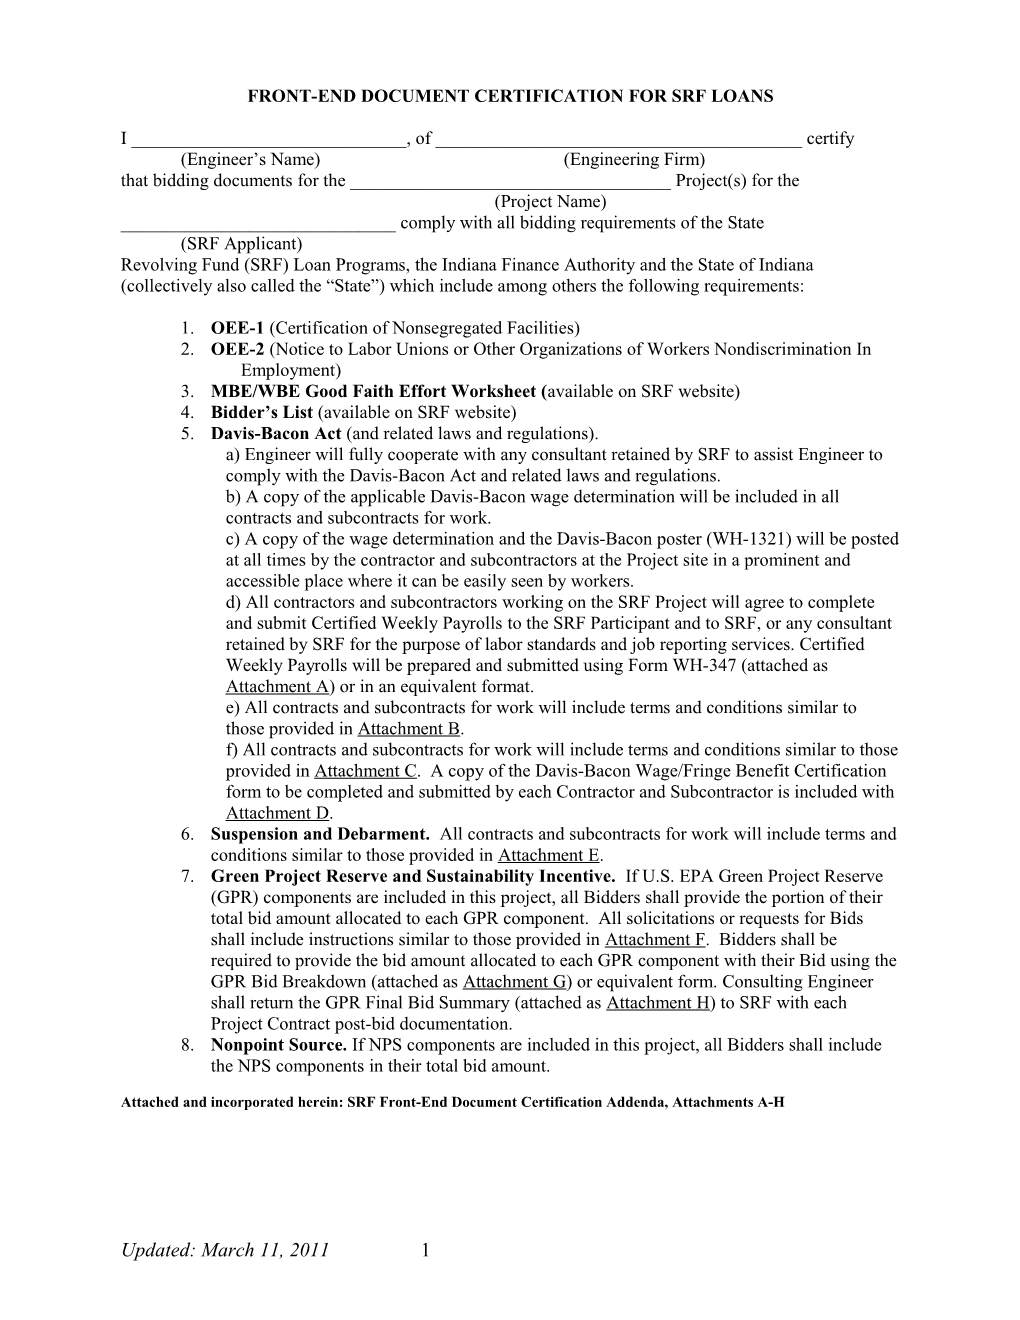 Front-End Document Certification for Srf Loans